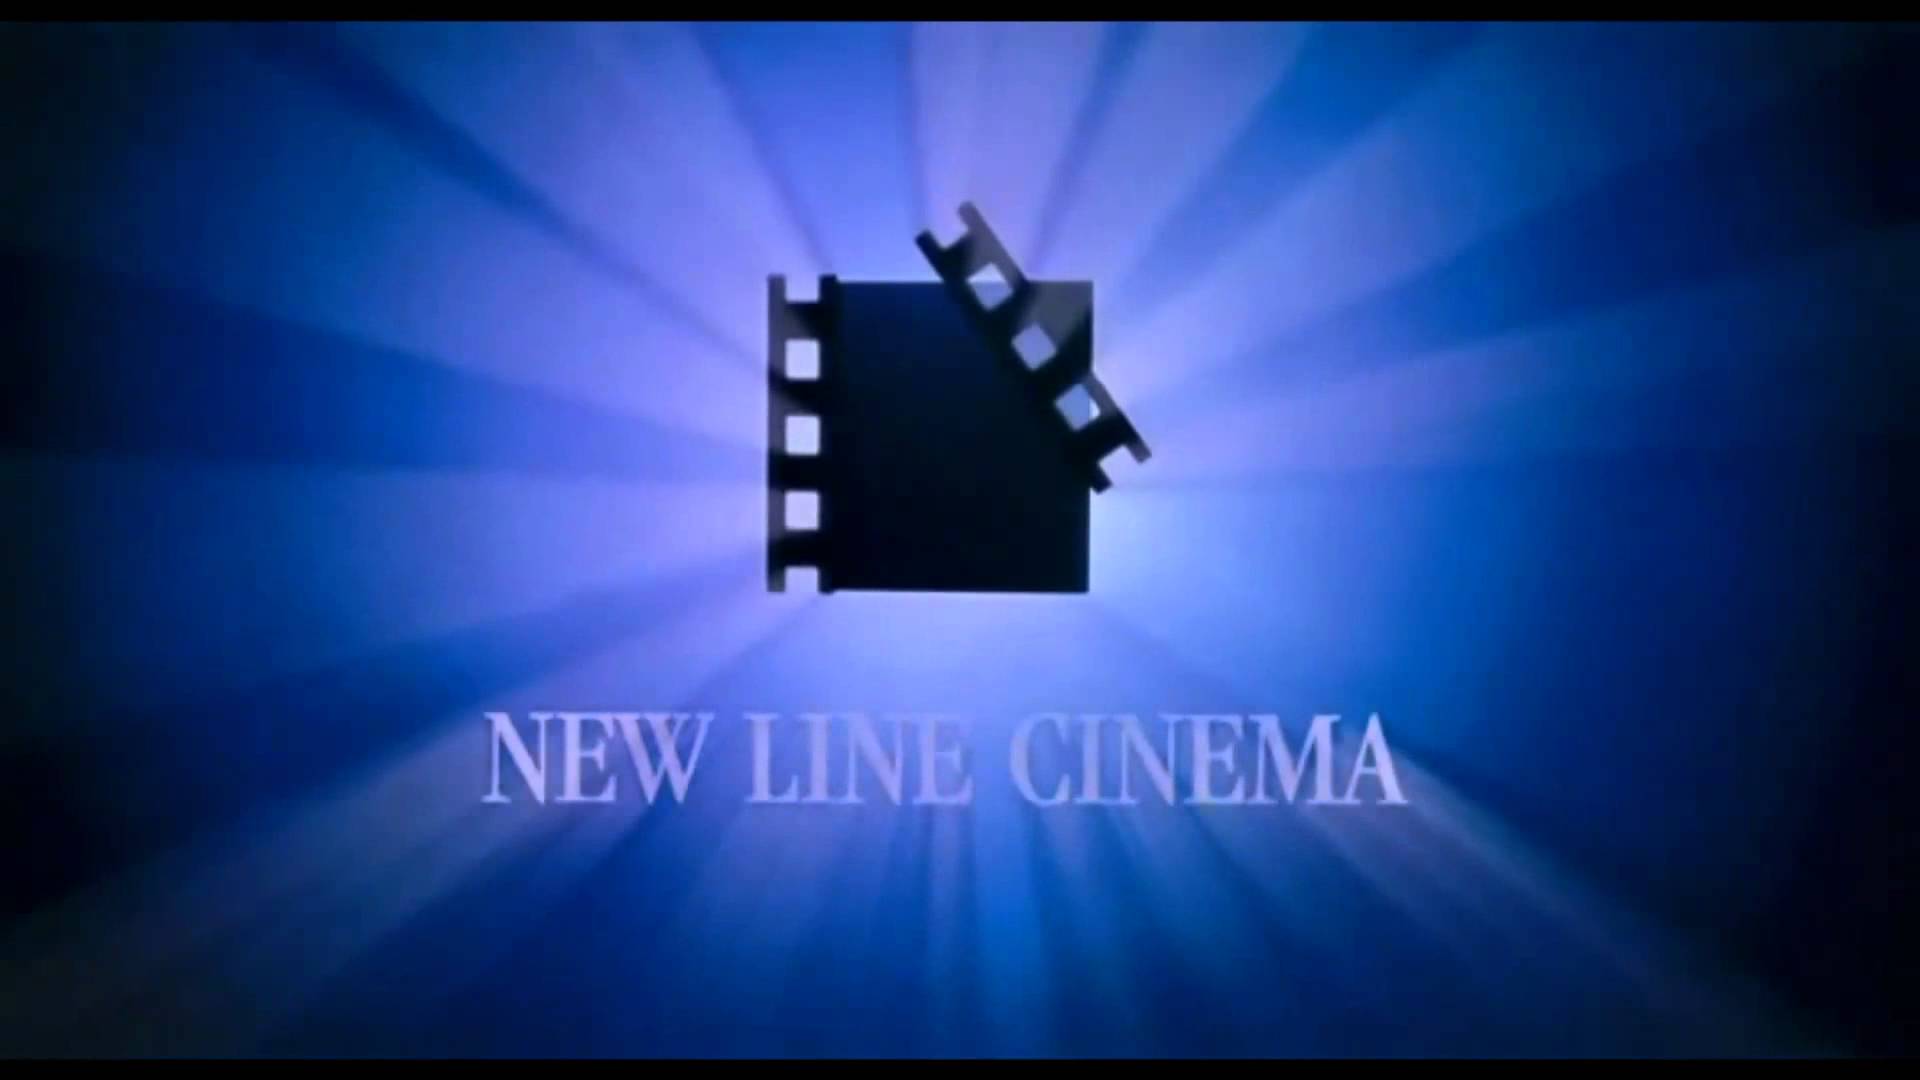 New films in cinema. Нью лайн Синема логотип. Заставка Нью лайн Синема. Cinema Кинокомпания. New line Cinema заставка.